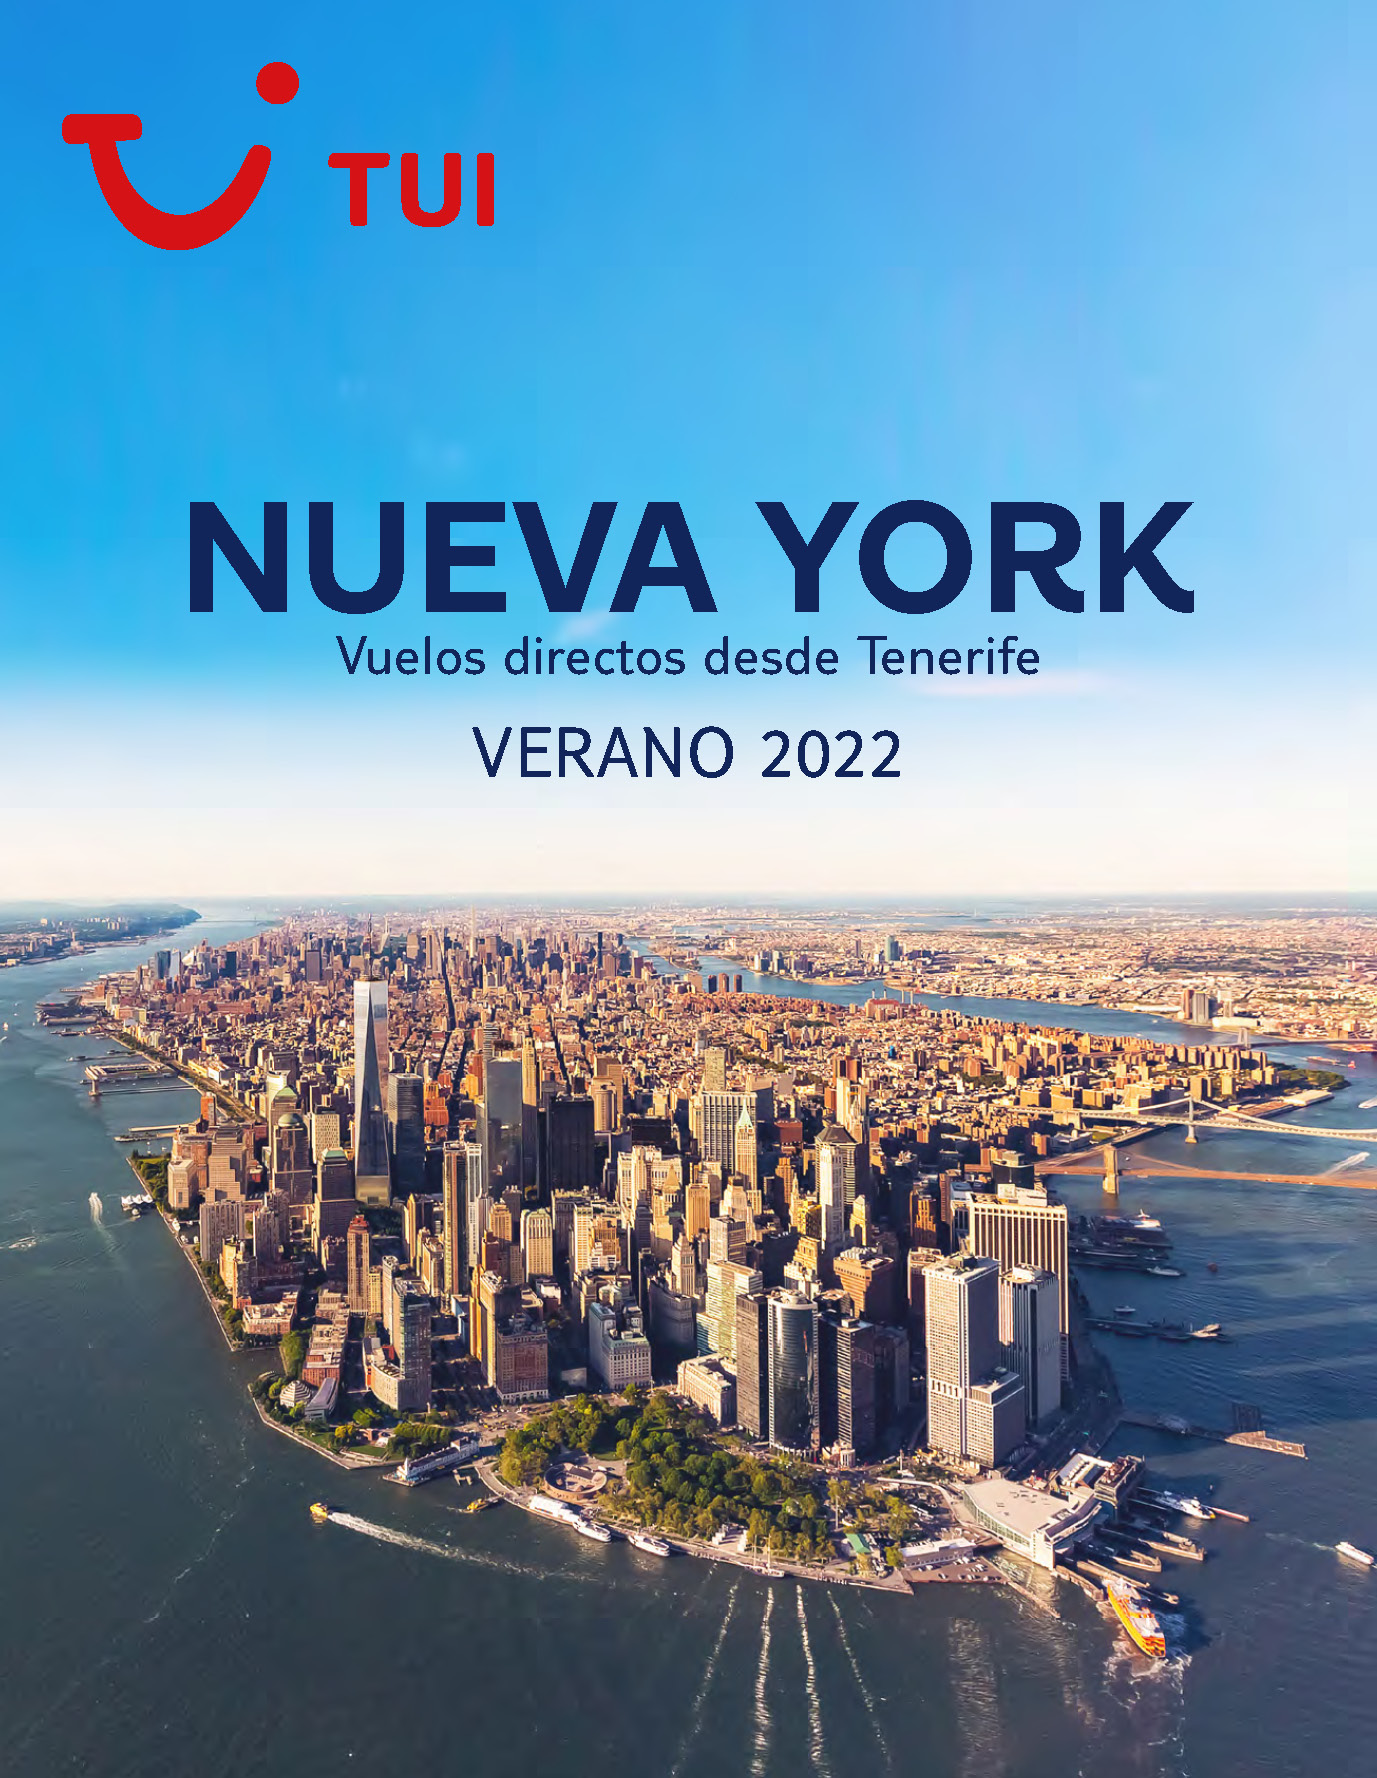 Oferta TUI Ambassador Tours Verano 2022 Nueva York vuelo directo desde Tenerife